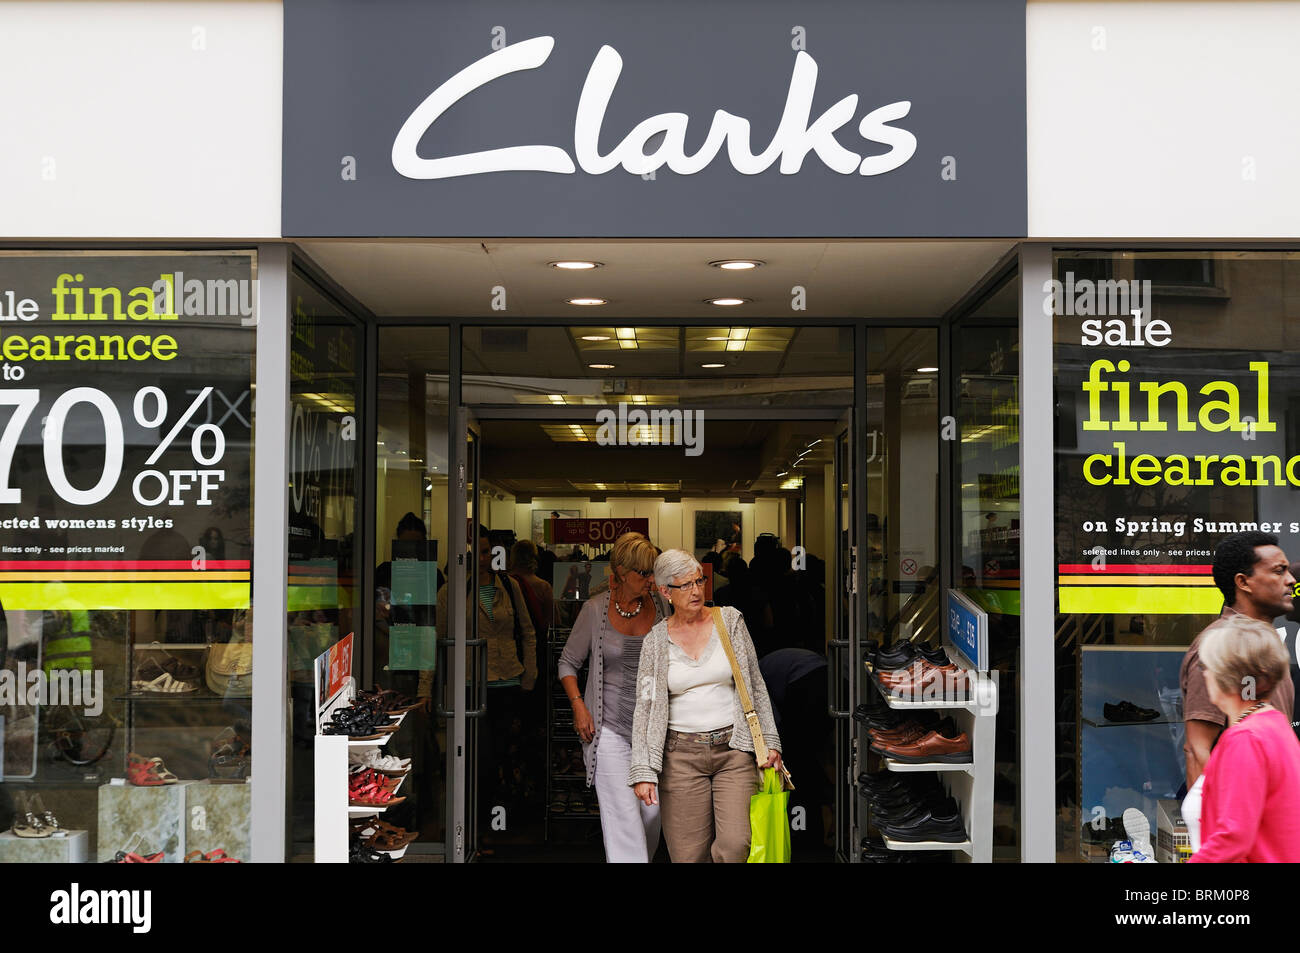 clarks shoe shops england